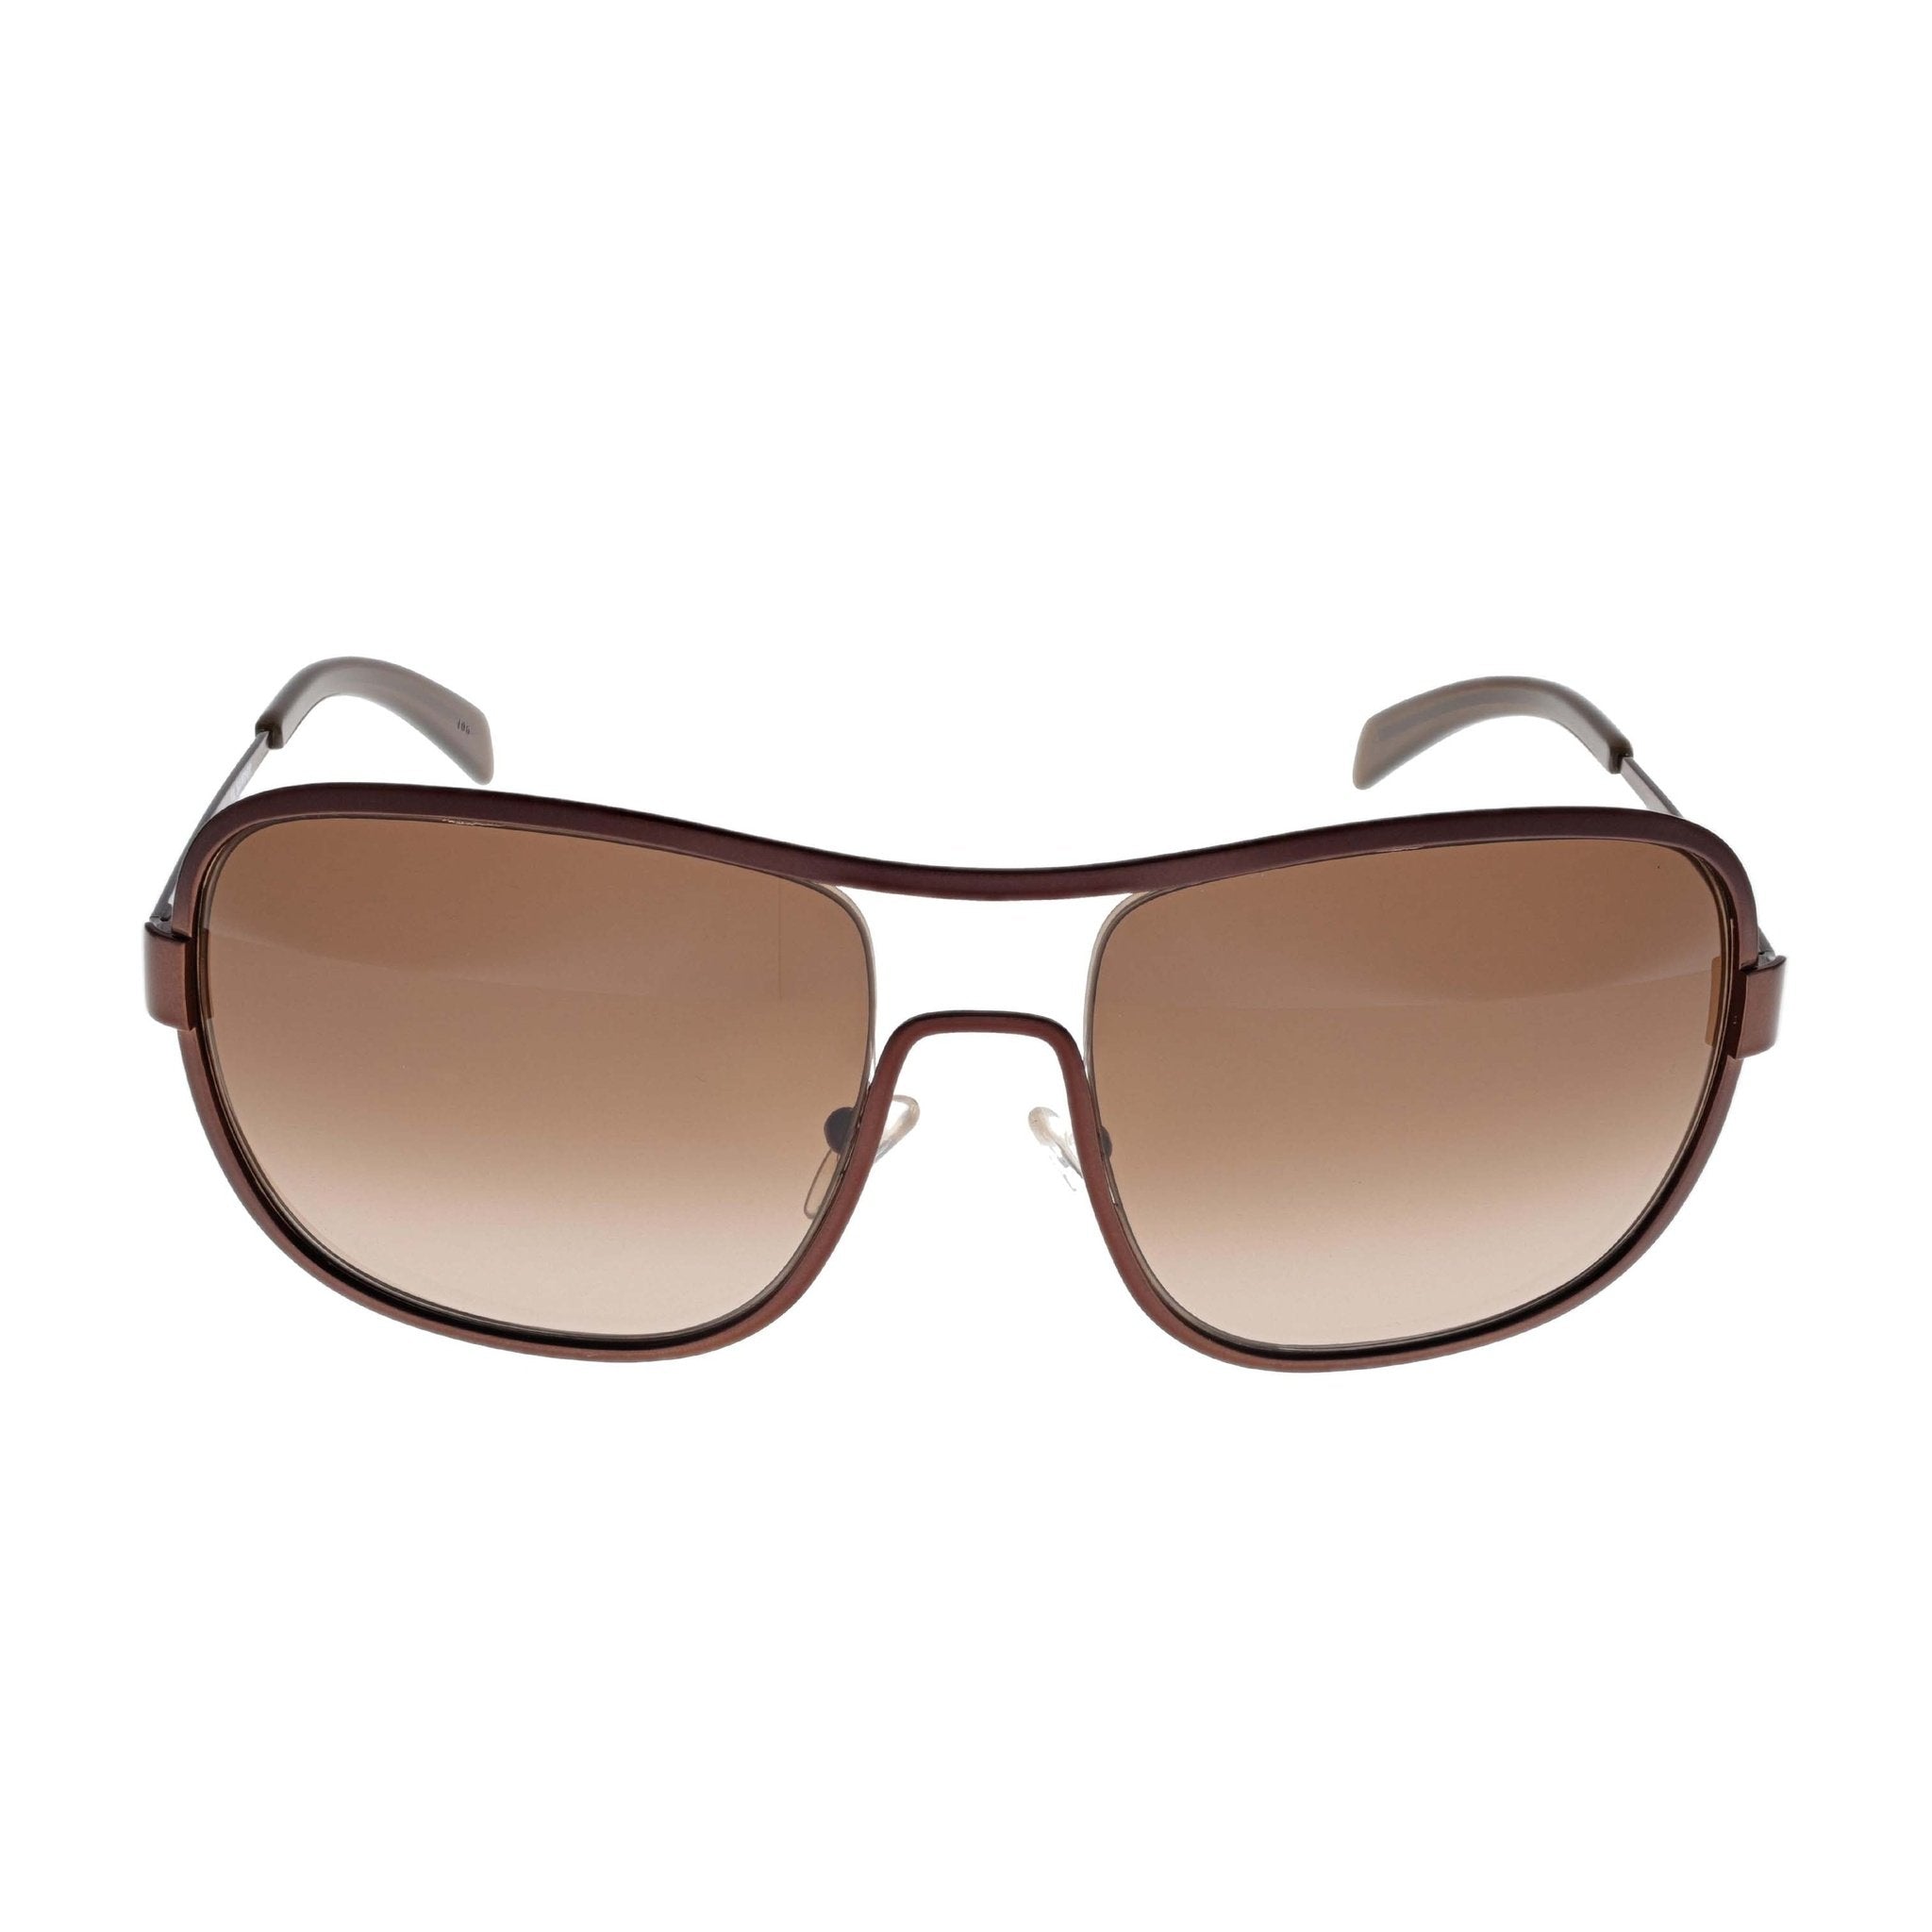 Jil Sander Sunglasses - JS126S - Bronze